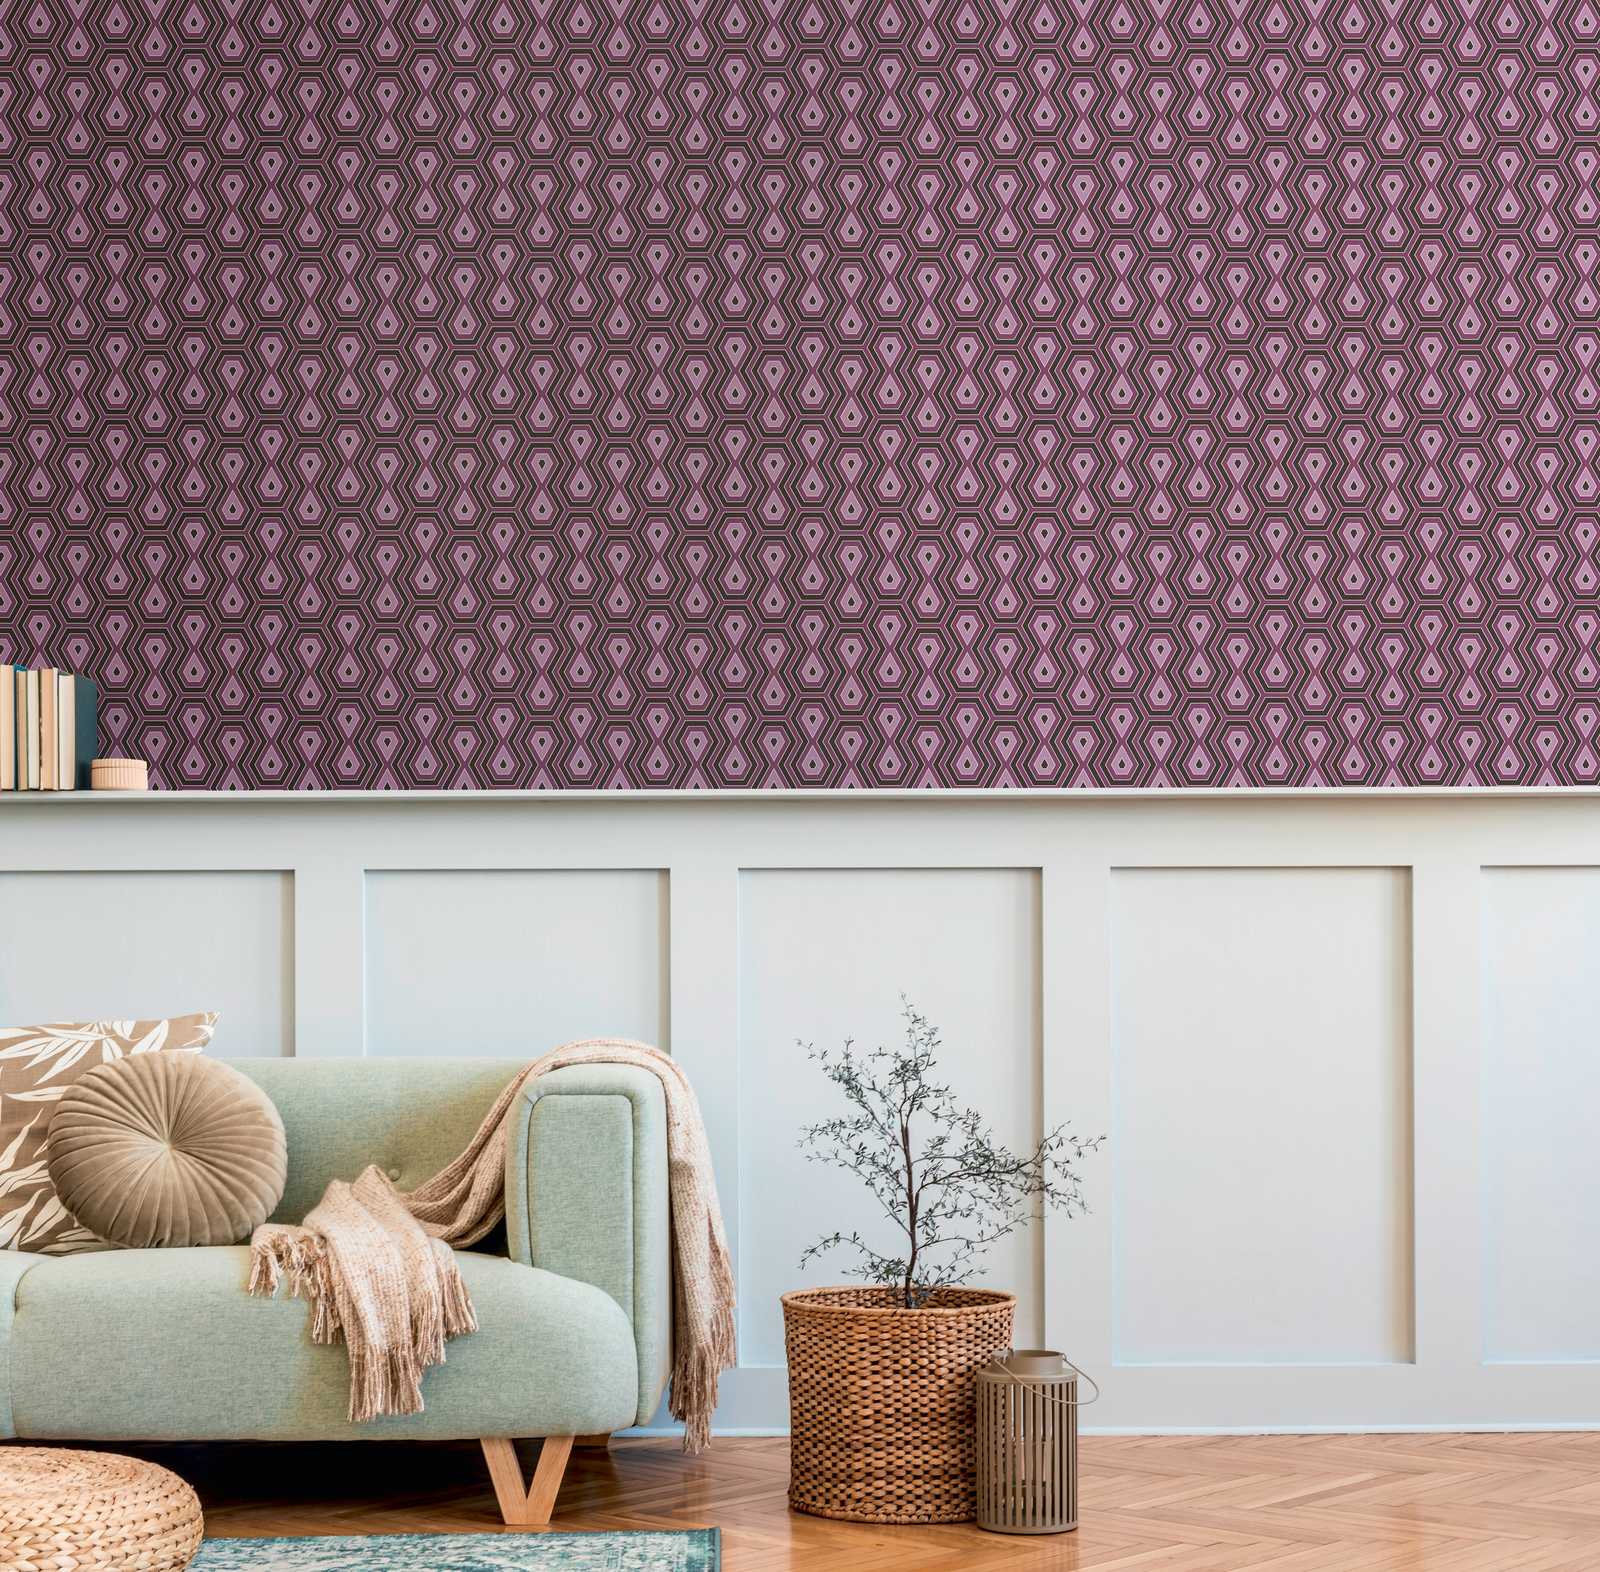             Pattern wallpaper purple & old pink with graphic retro design - purple, black
        